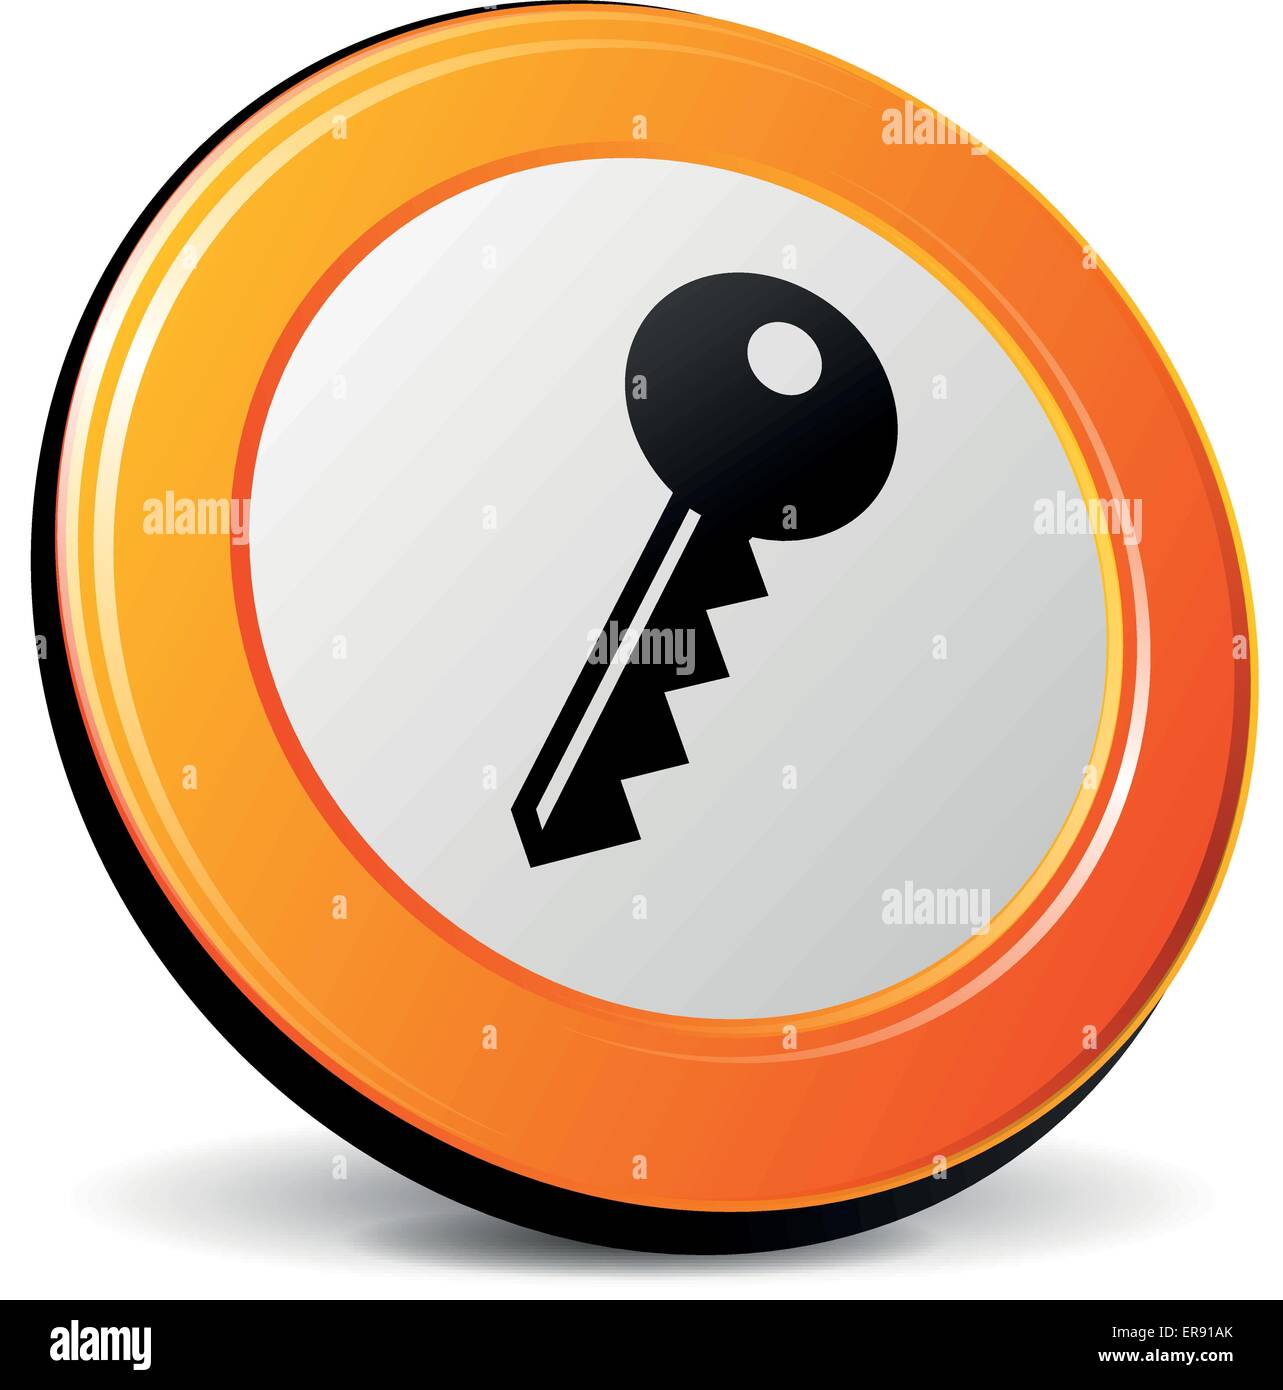 Vektor-Illustration der Orange 3d Schlüsselsymbol Stock Vektor